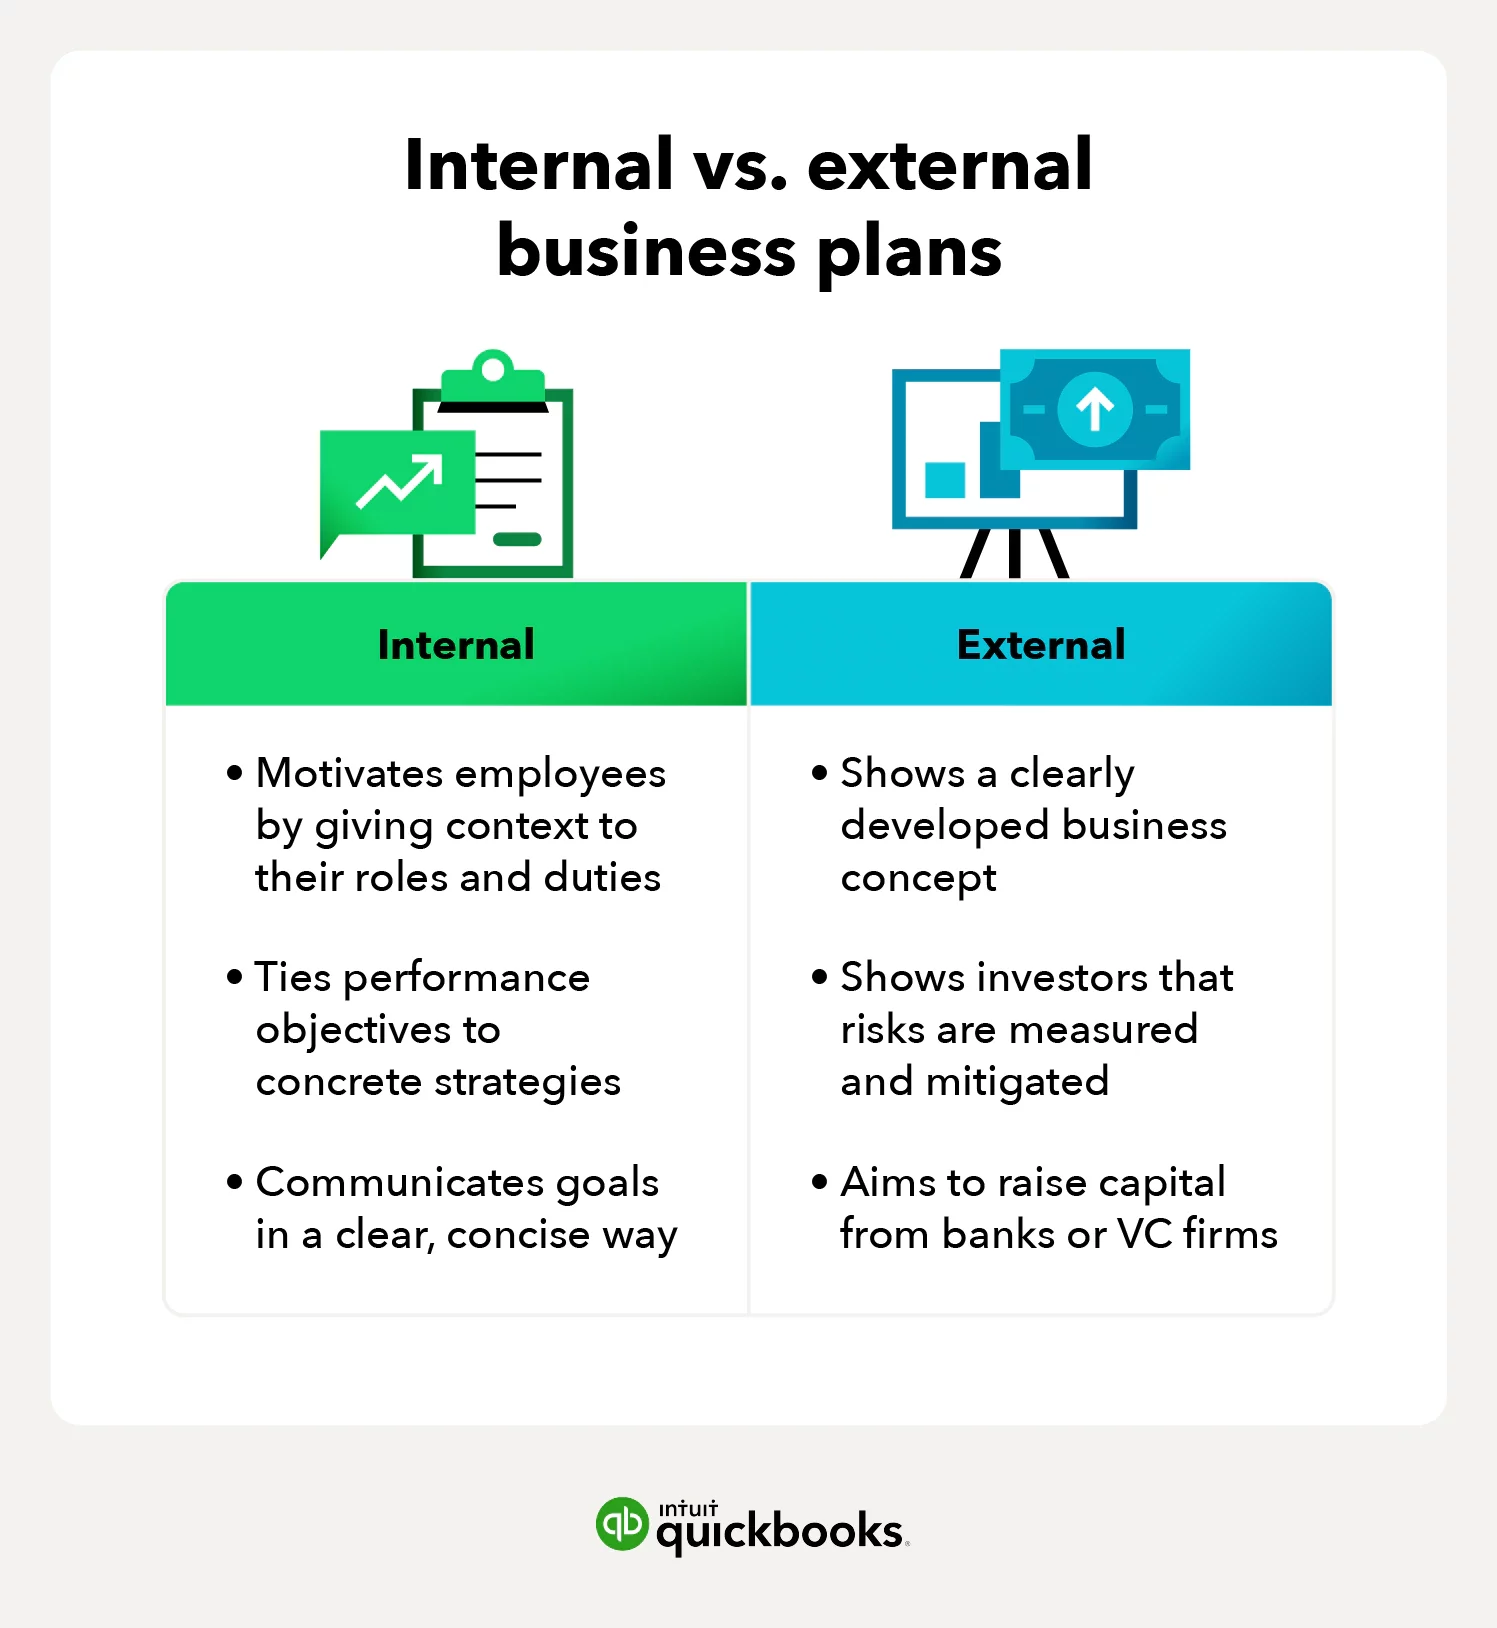 internal-vs-external-business-plan-image-2x-us-en-2348568